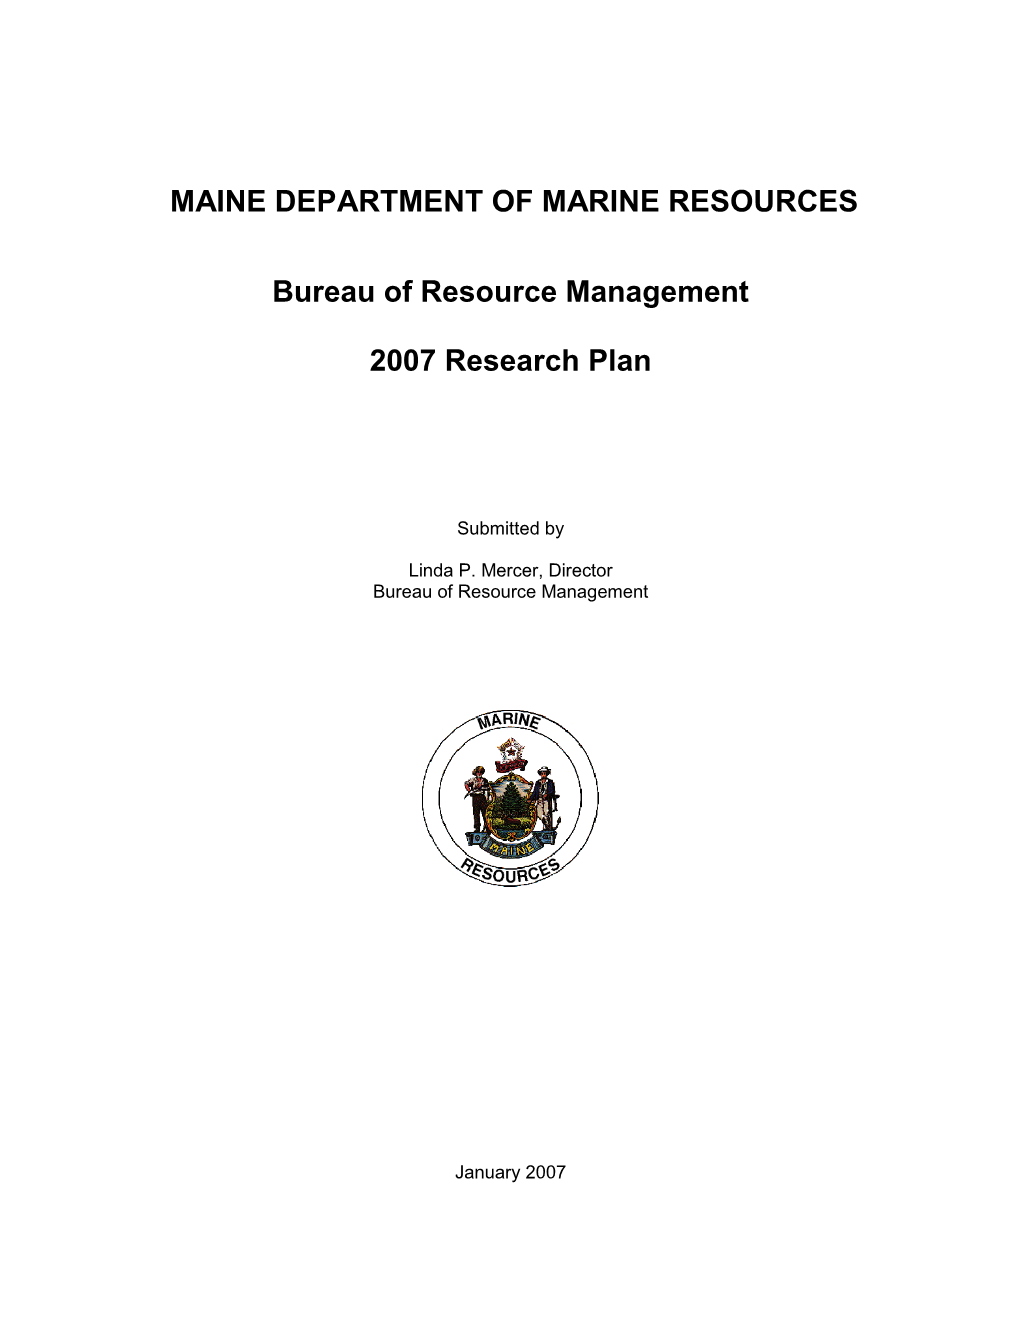 MAINE DEPARTMENT of MARINE RESOURCES Bureau of Resource